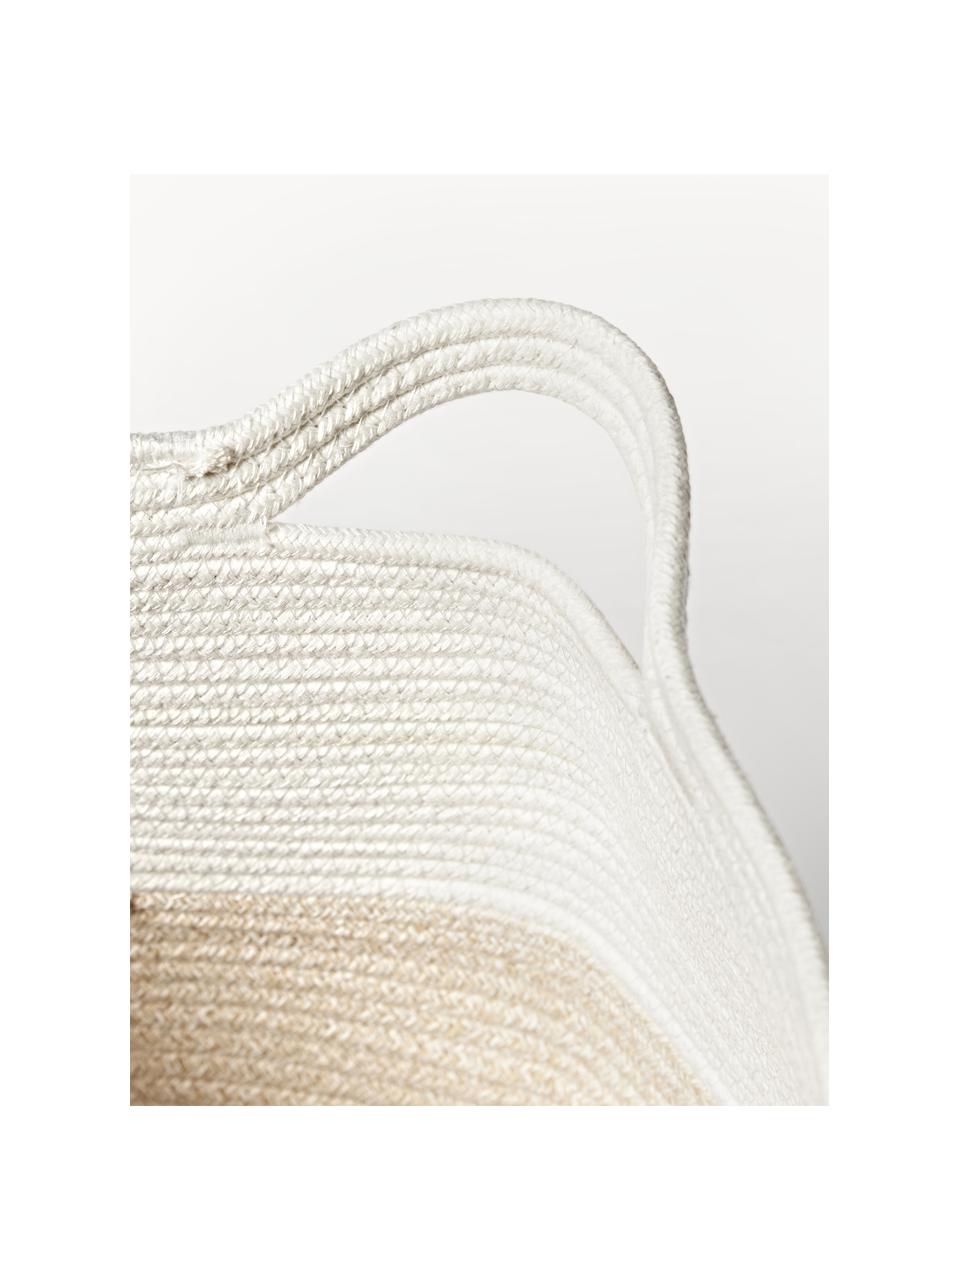 Cesta Kiya, 35% cotone, 65% poliestere, Bianco, beige, Ø 40 x Alt. 55 cm